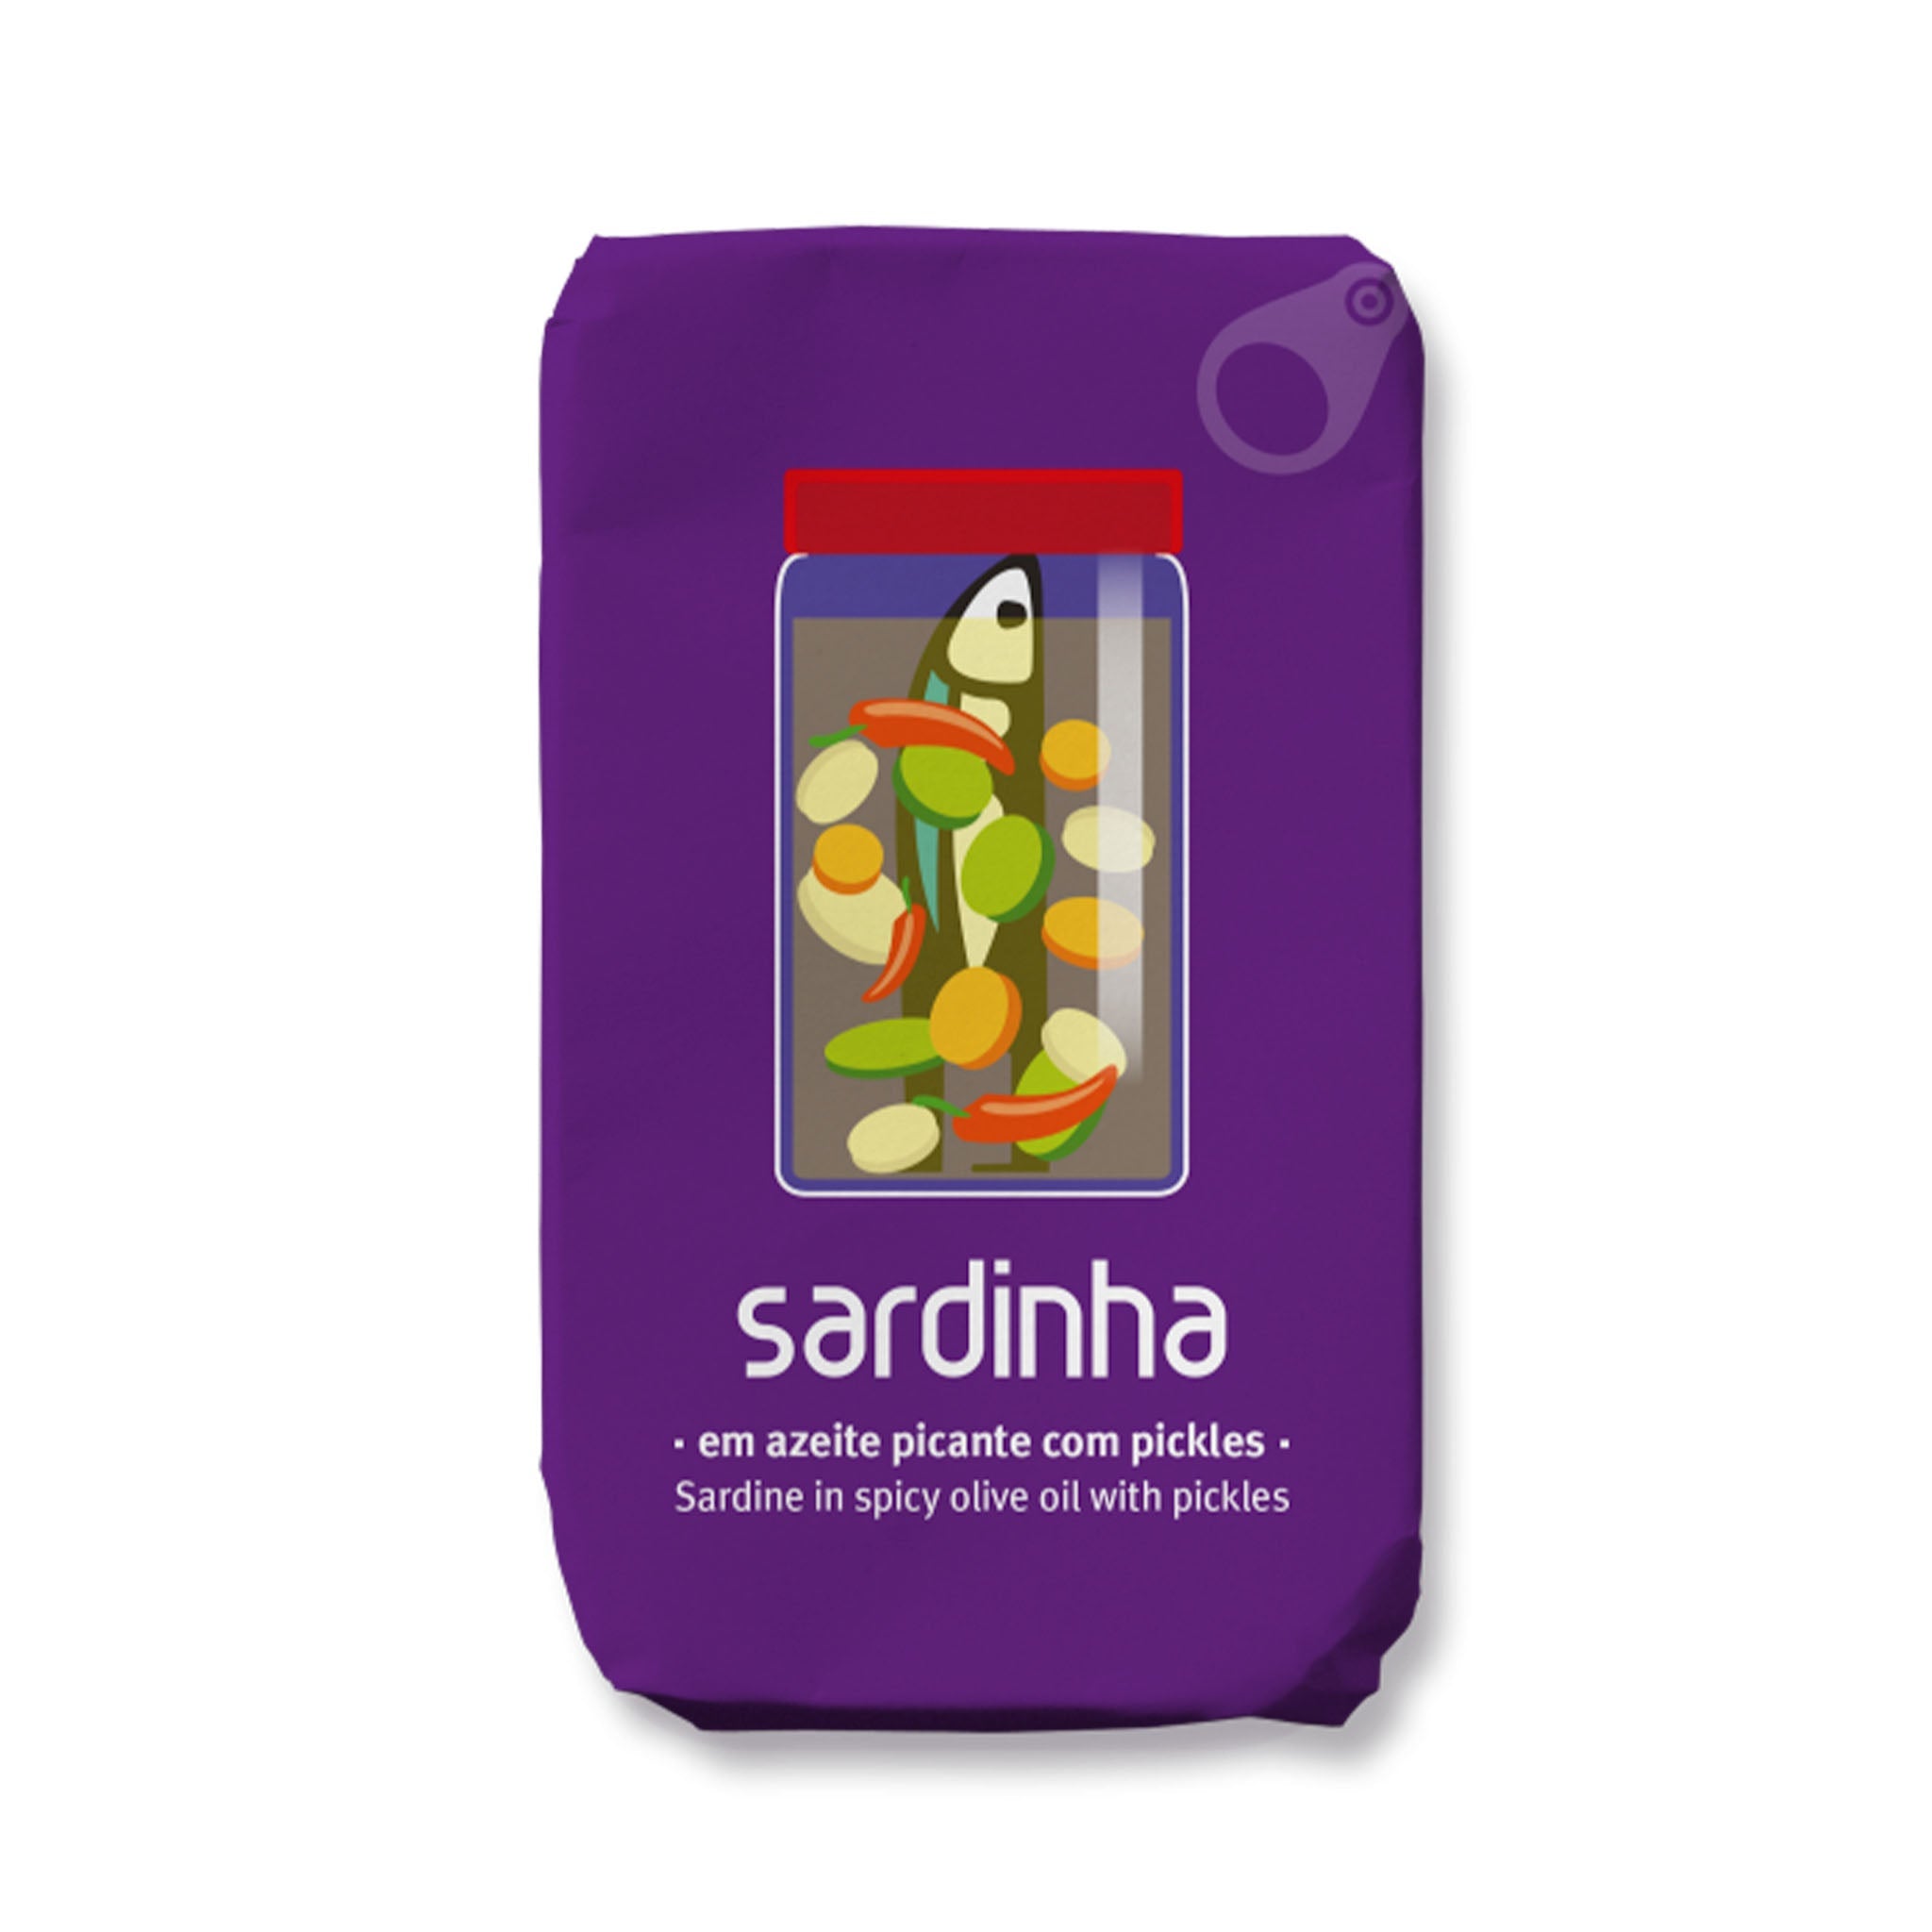 Sardinha Sardines Spicy Olive Oil Pickles